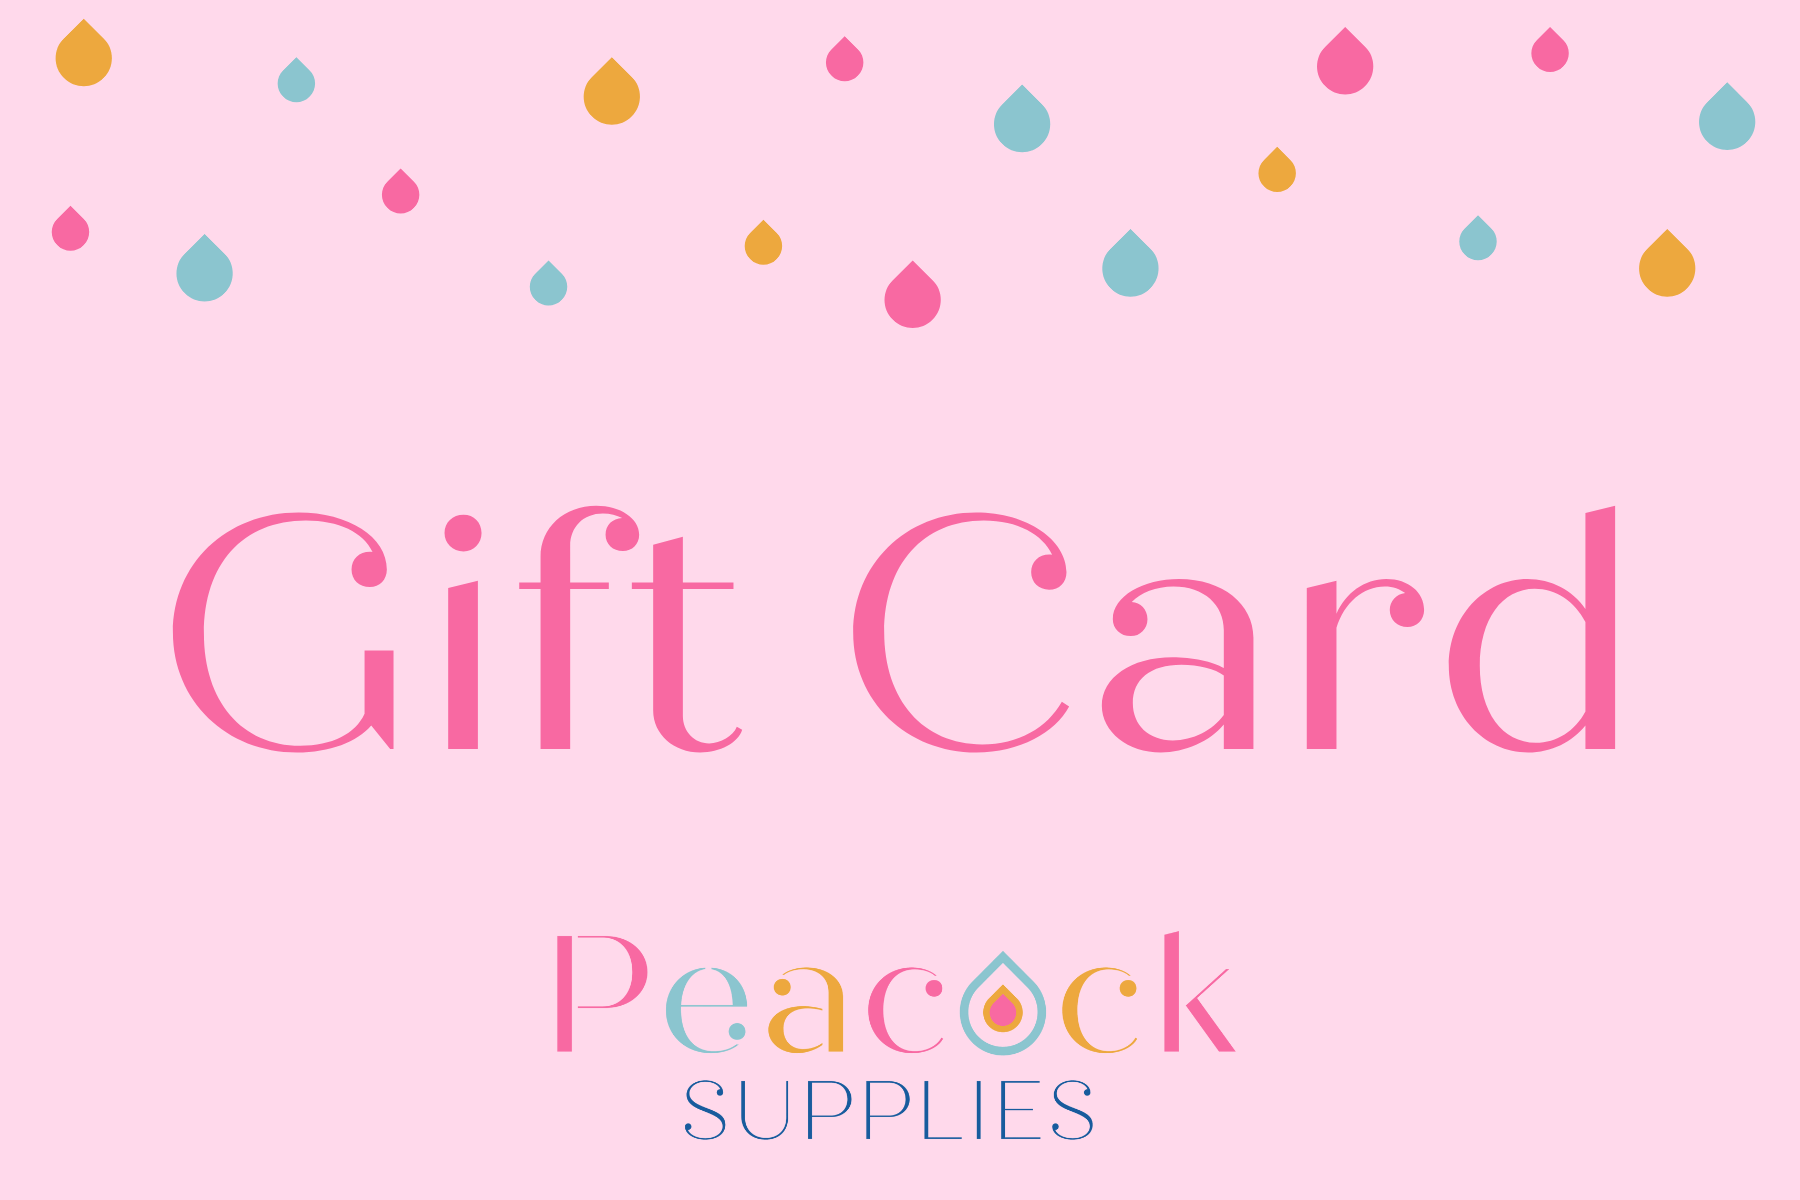 Peacock Supplies Gift Card